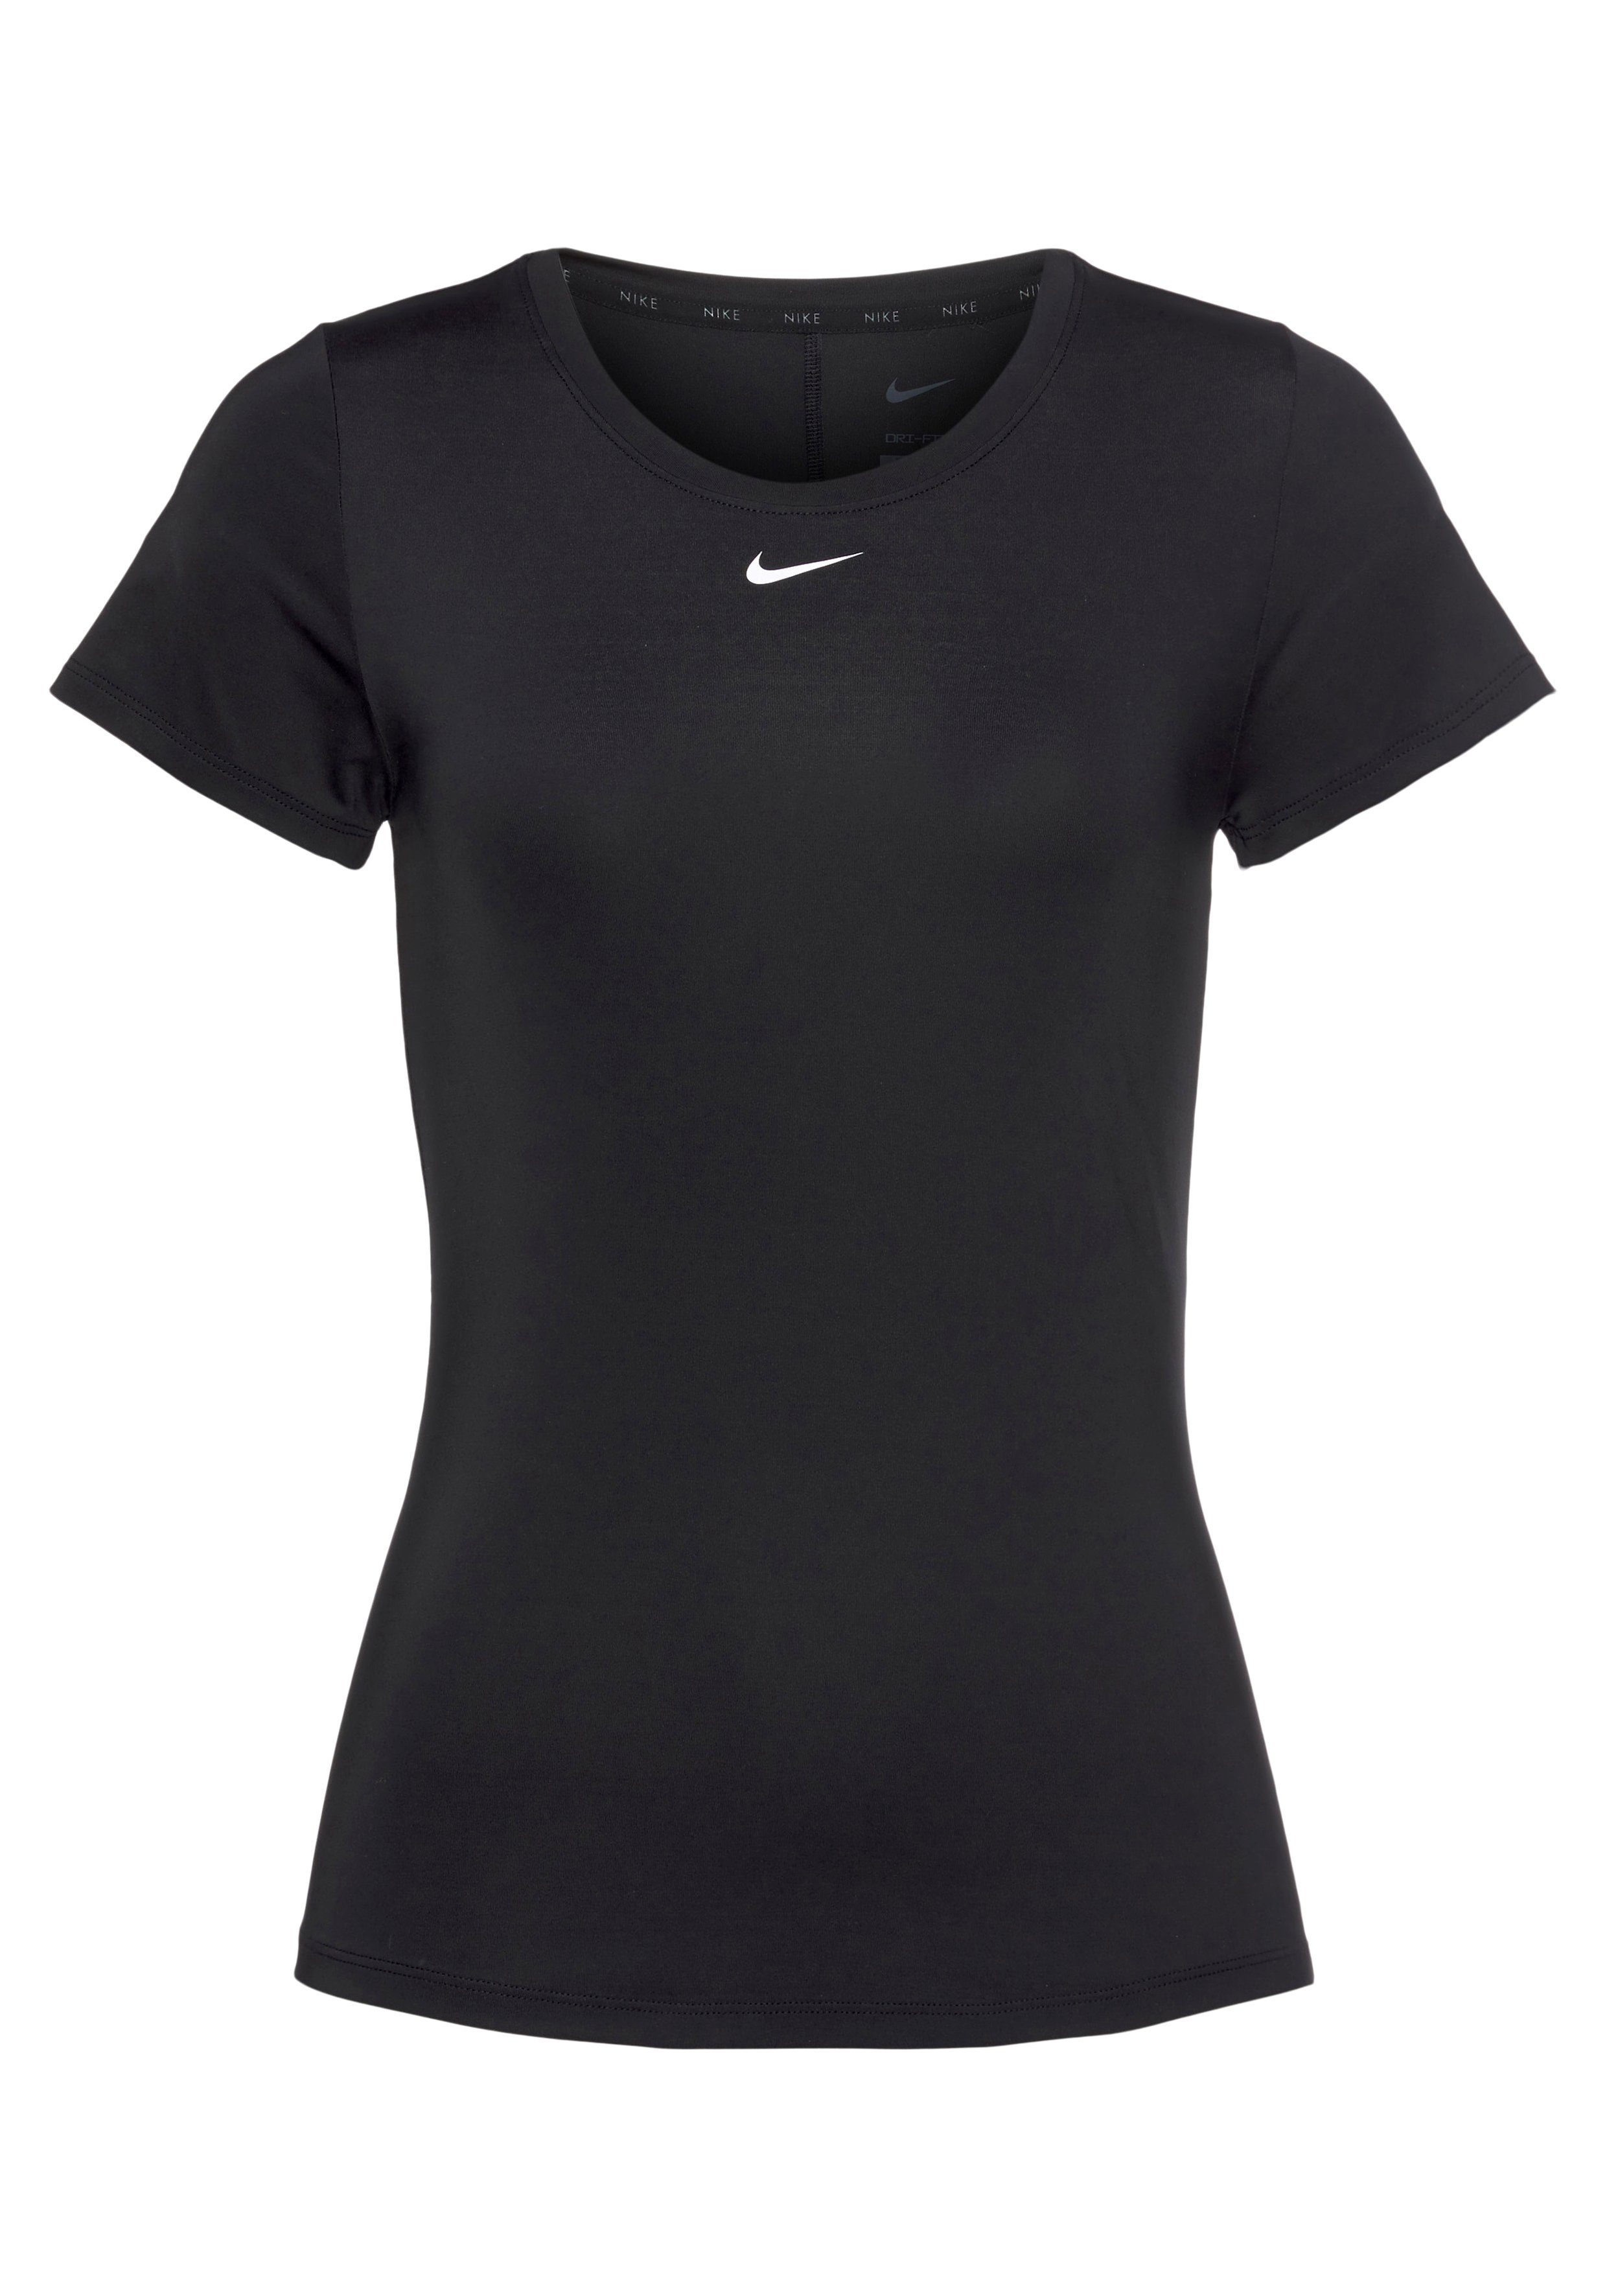 DRI-FIT SHORT-SLEEVE SLIM FIT WOMEN'S Nike TOP schwarz ONE Trainingsshirt